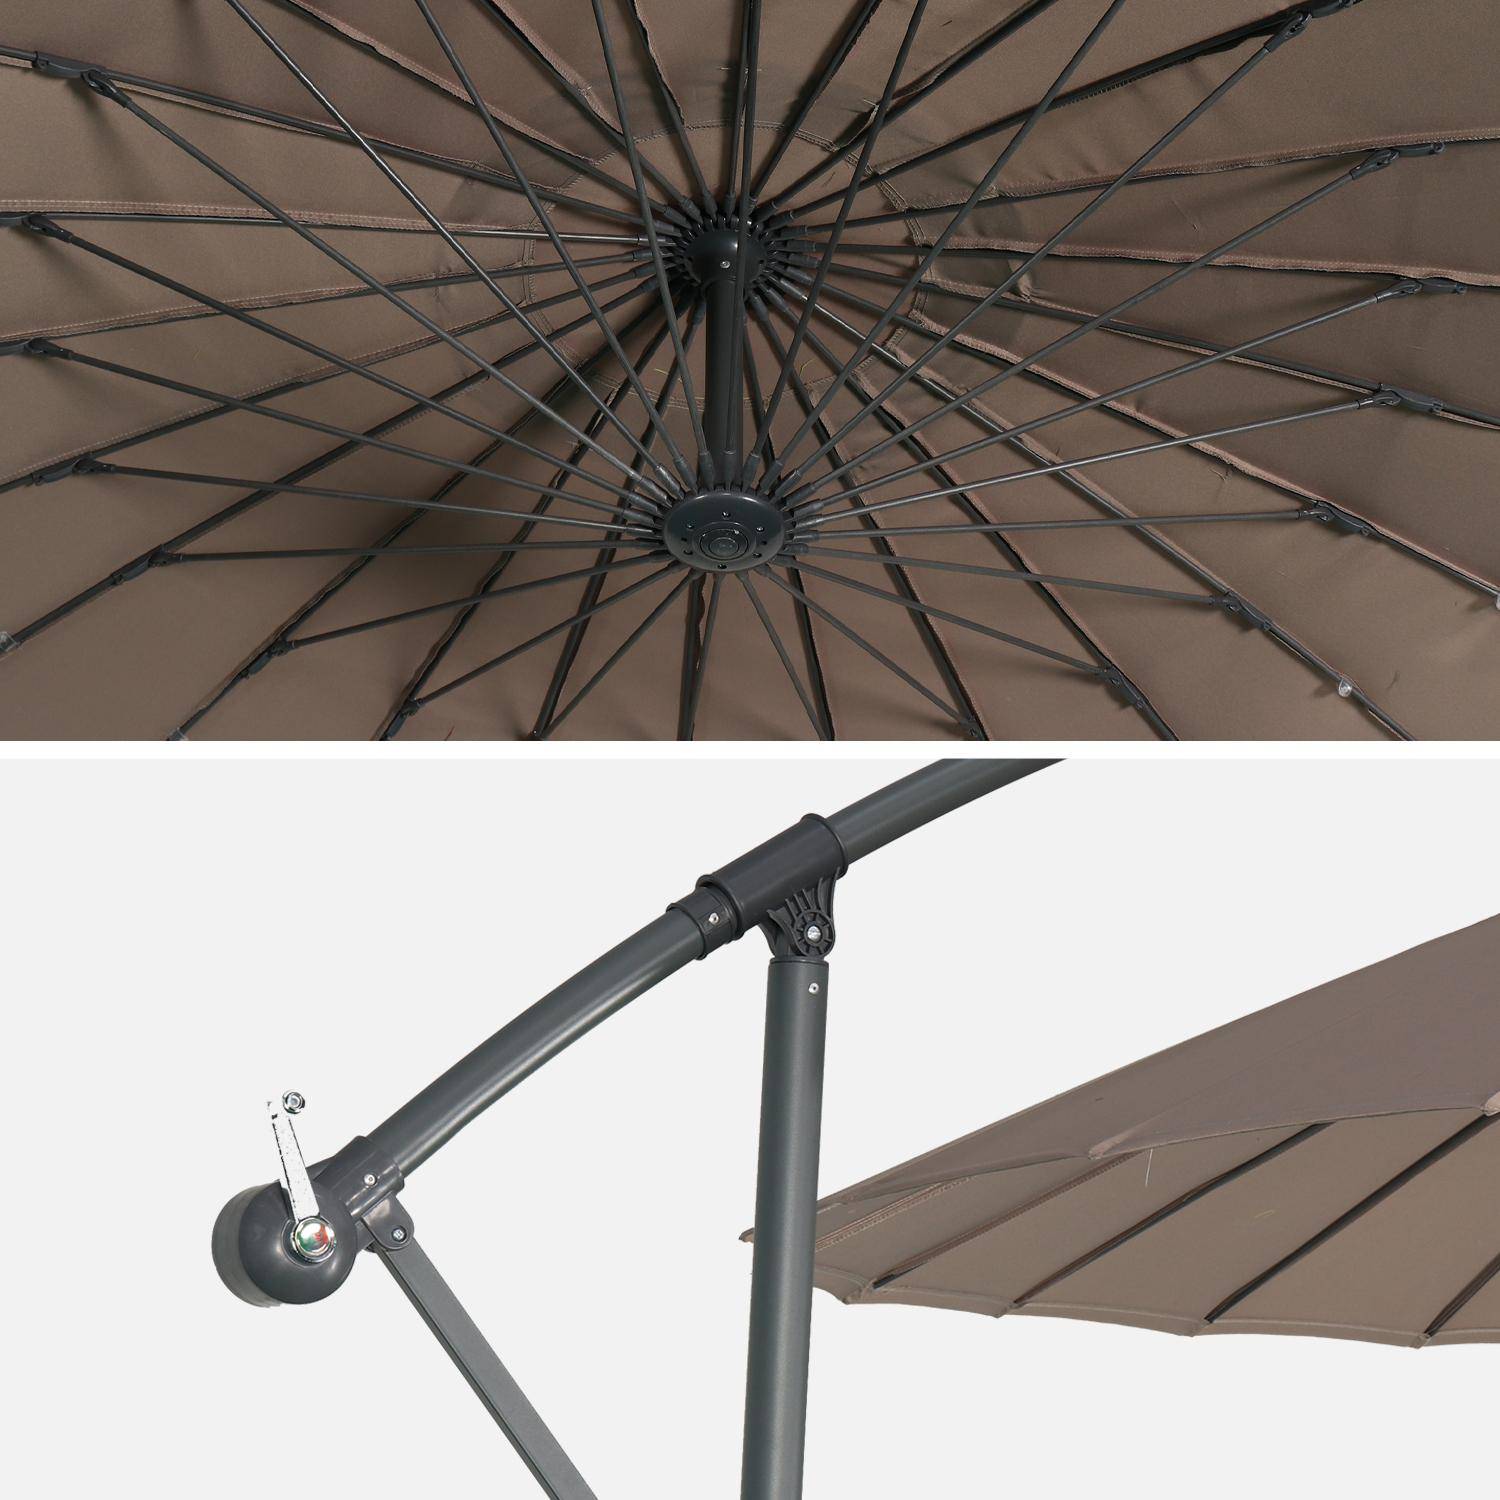 Cantilever parasol Ø300cm  - Anthracite frame, fibreglass ribs, anti-reverse crank - Shanghai - Beige-brown,sweeek,Photo4